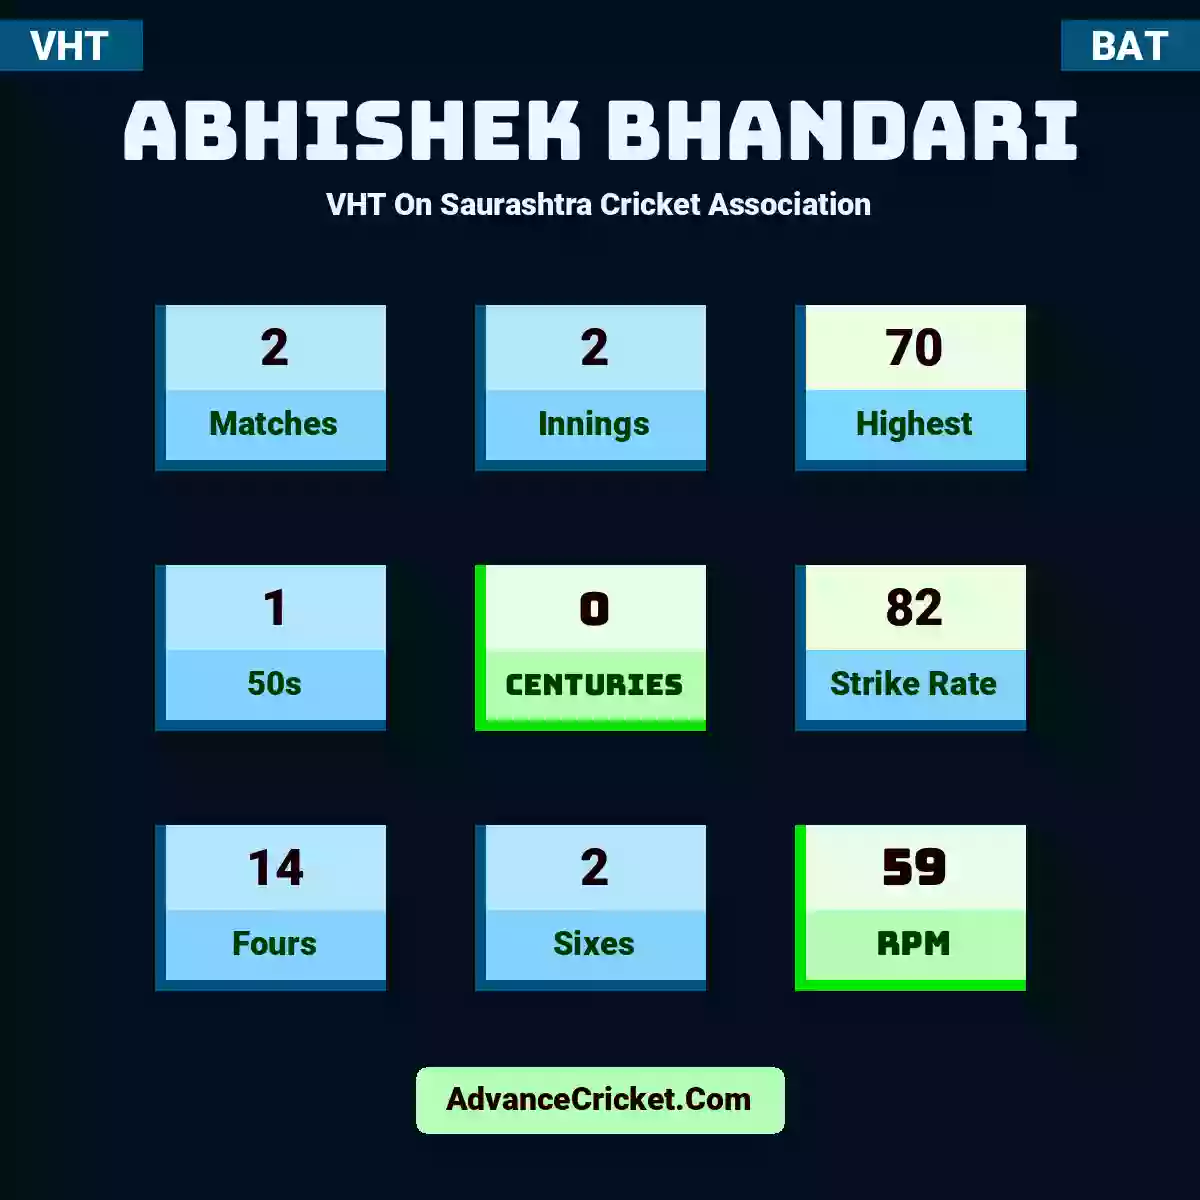 Abhishek Bhandari VHT  On Saurashtra Cricket Association, Abhishek Bhandari played 2 matches, scored 70 runs as highest, 1 half-centuries, and 0 centuries, with a strike rate of 82. A.Bhandari hit 14 fours and 2 sixes, with an RPM of 59.